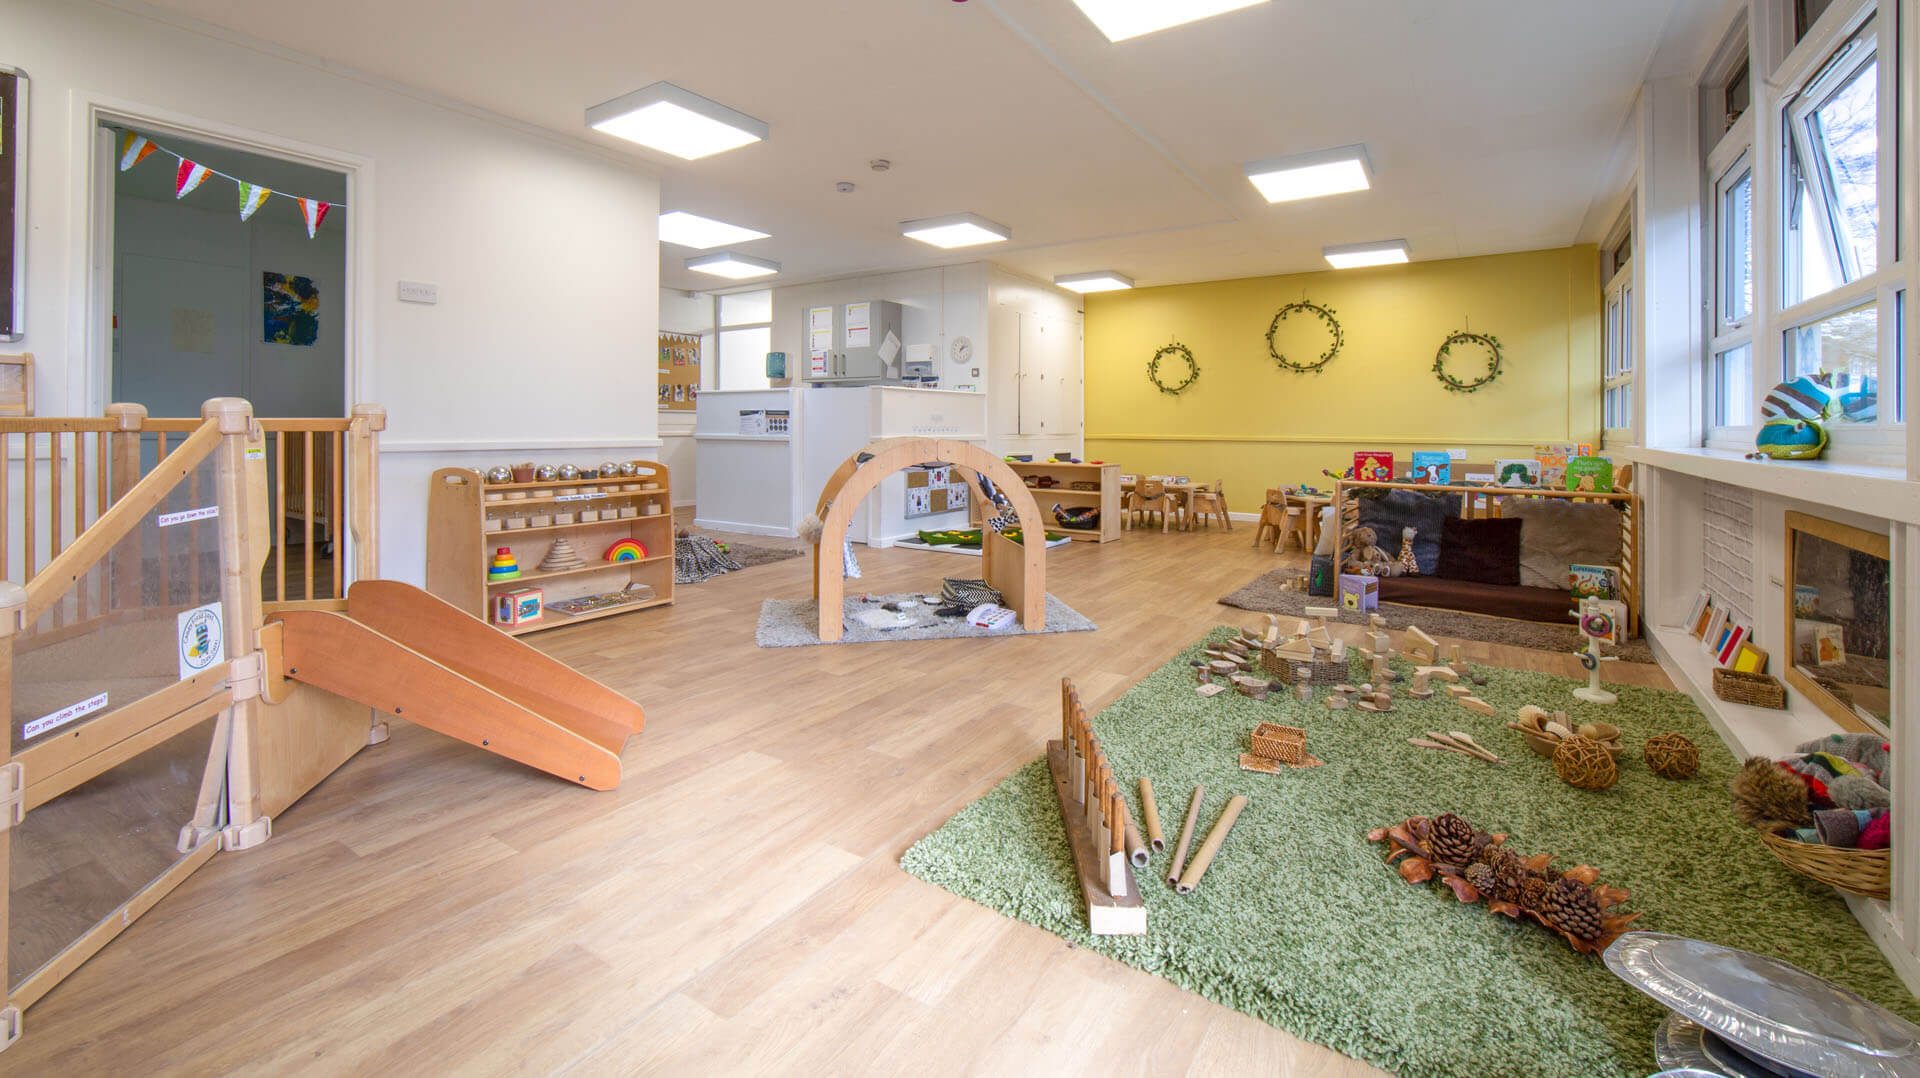 Southam Day Nursery and Preschool Baby Room